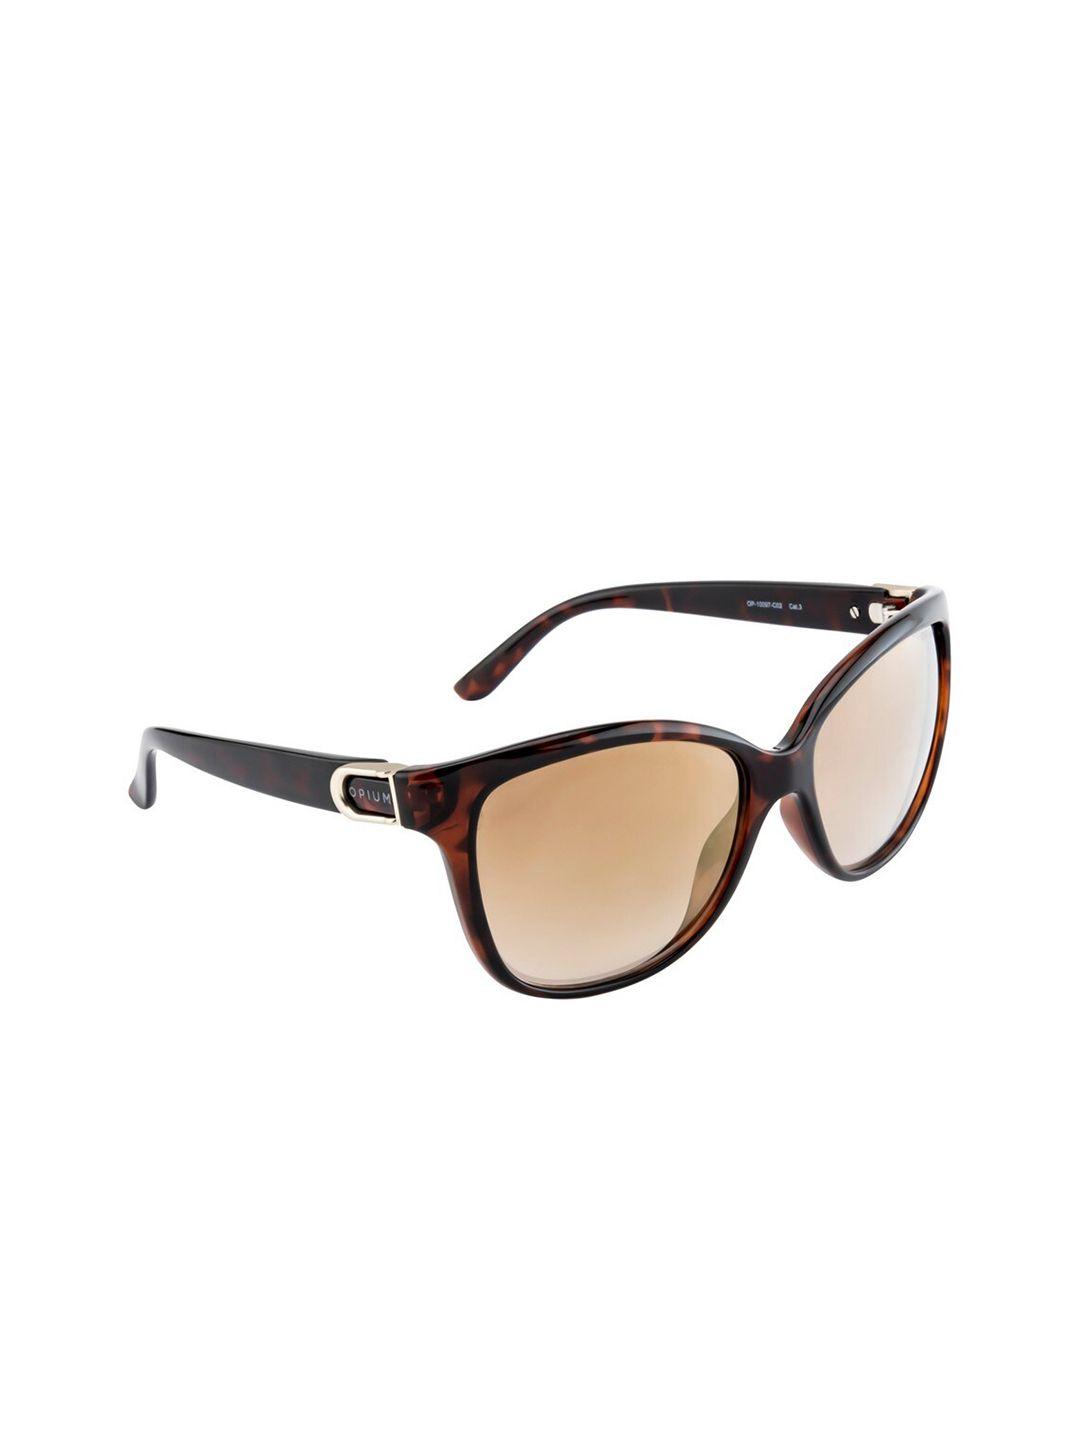 opium-women-brown-lens-&-brown-oval-sunglasses-with-uv-protected-lens-op-10097-c02